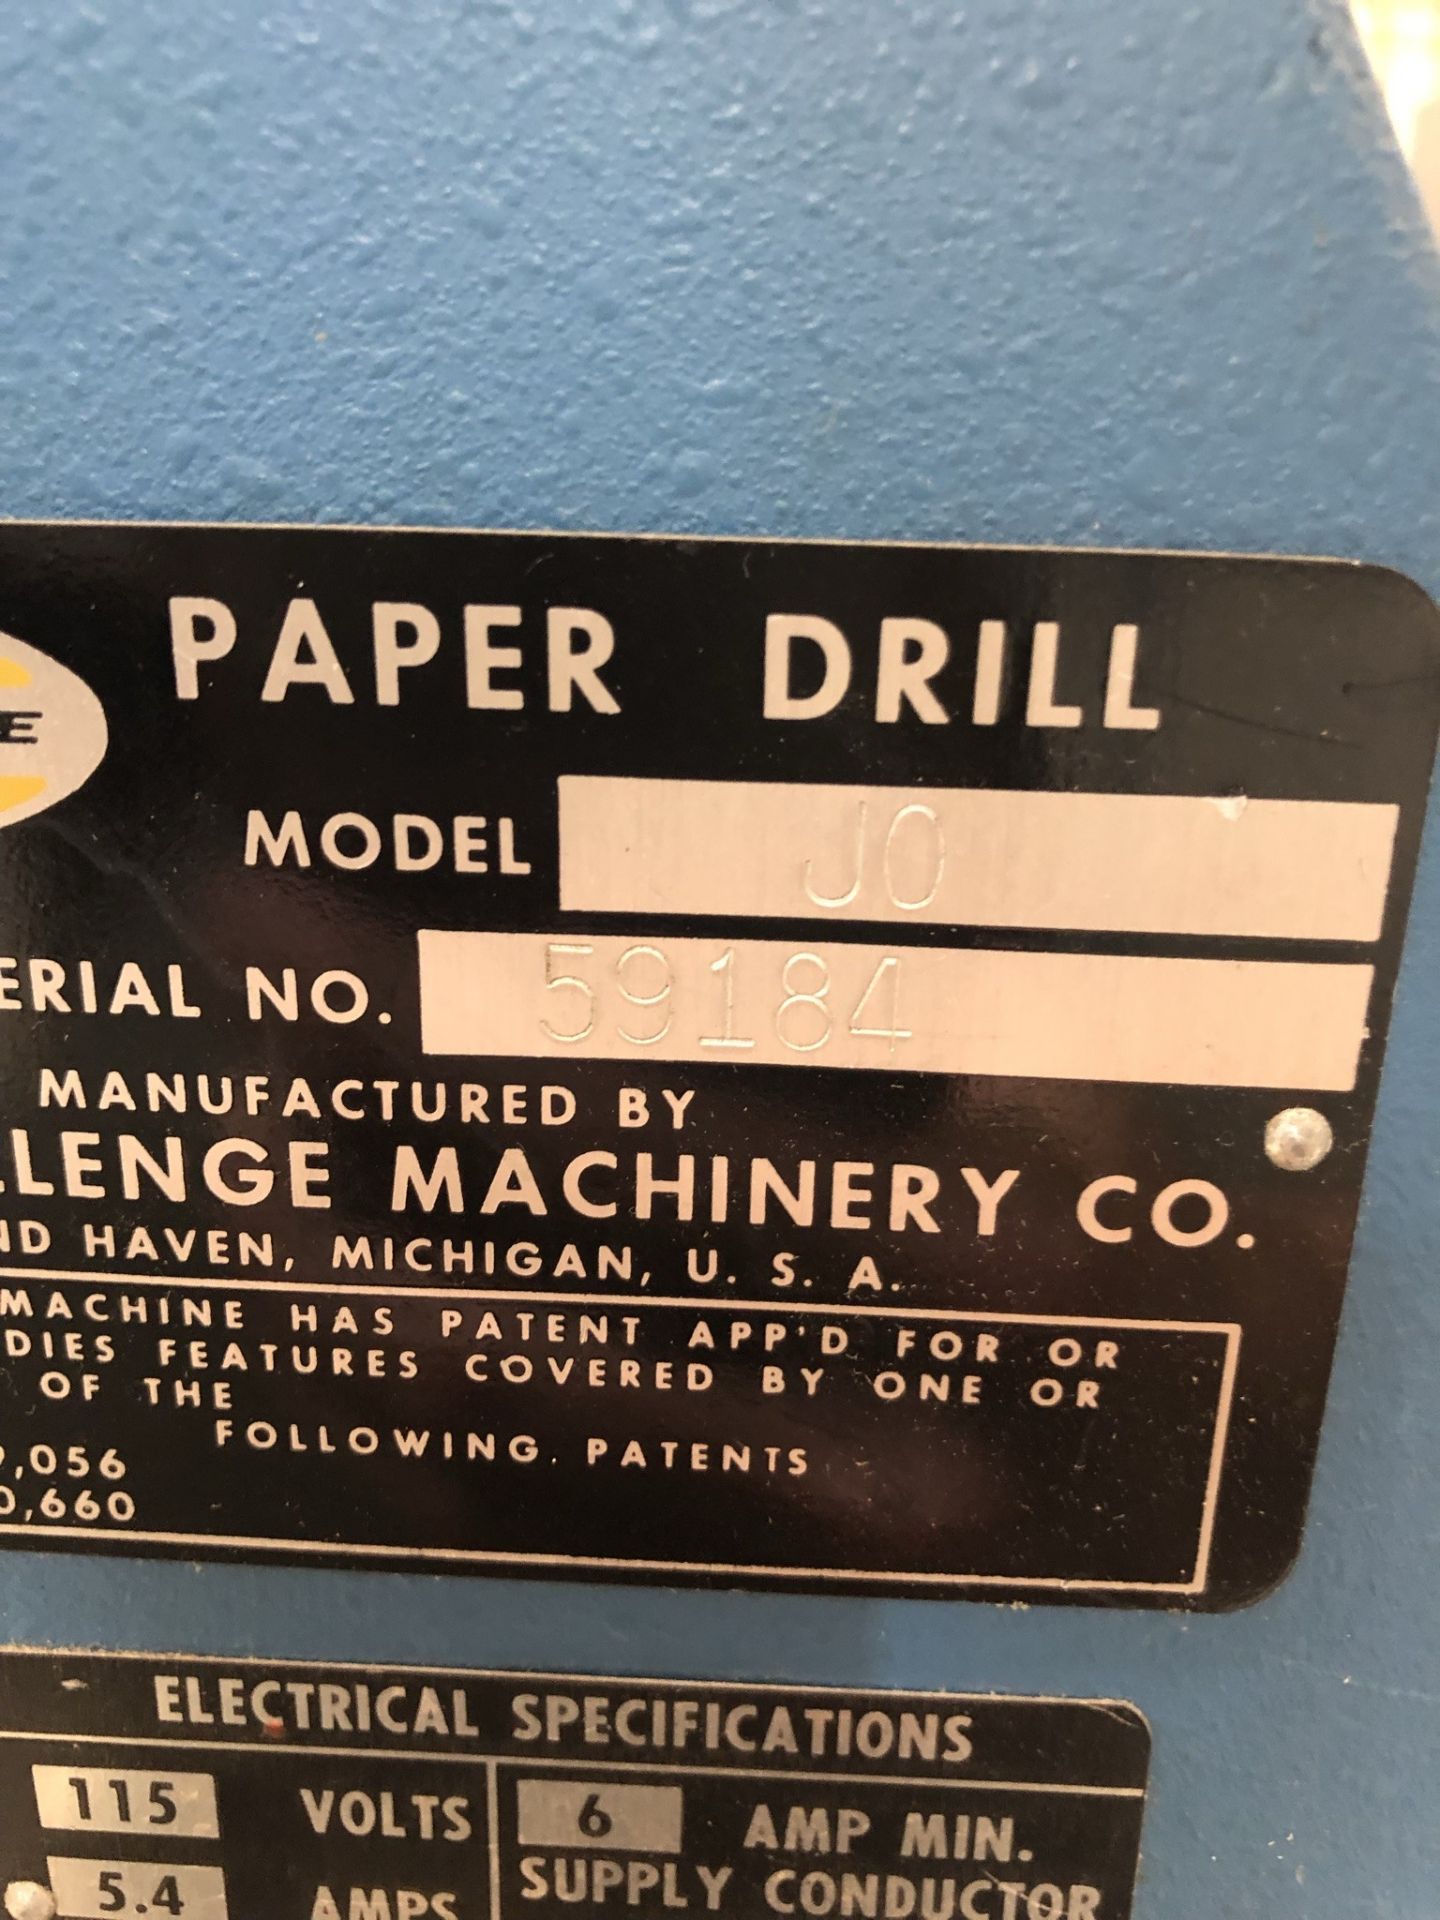 Harvard Apparatus Model 1201 Peristaltic pump, Challenge Machinery Company Model JO paper drill, - Image 2 of 4